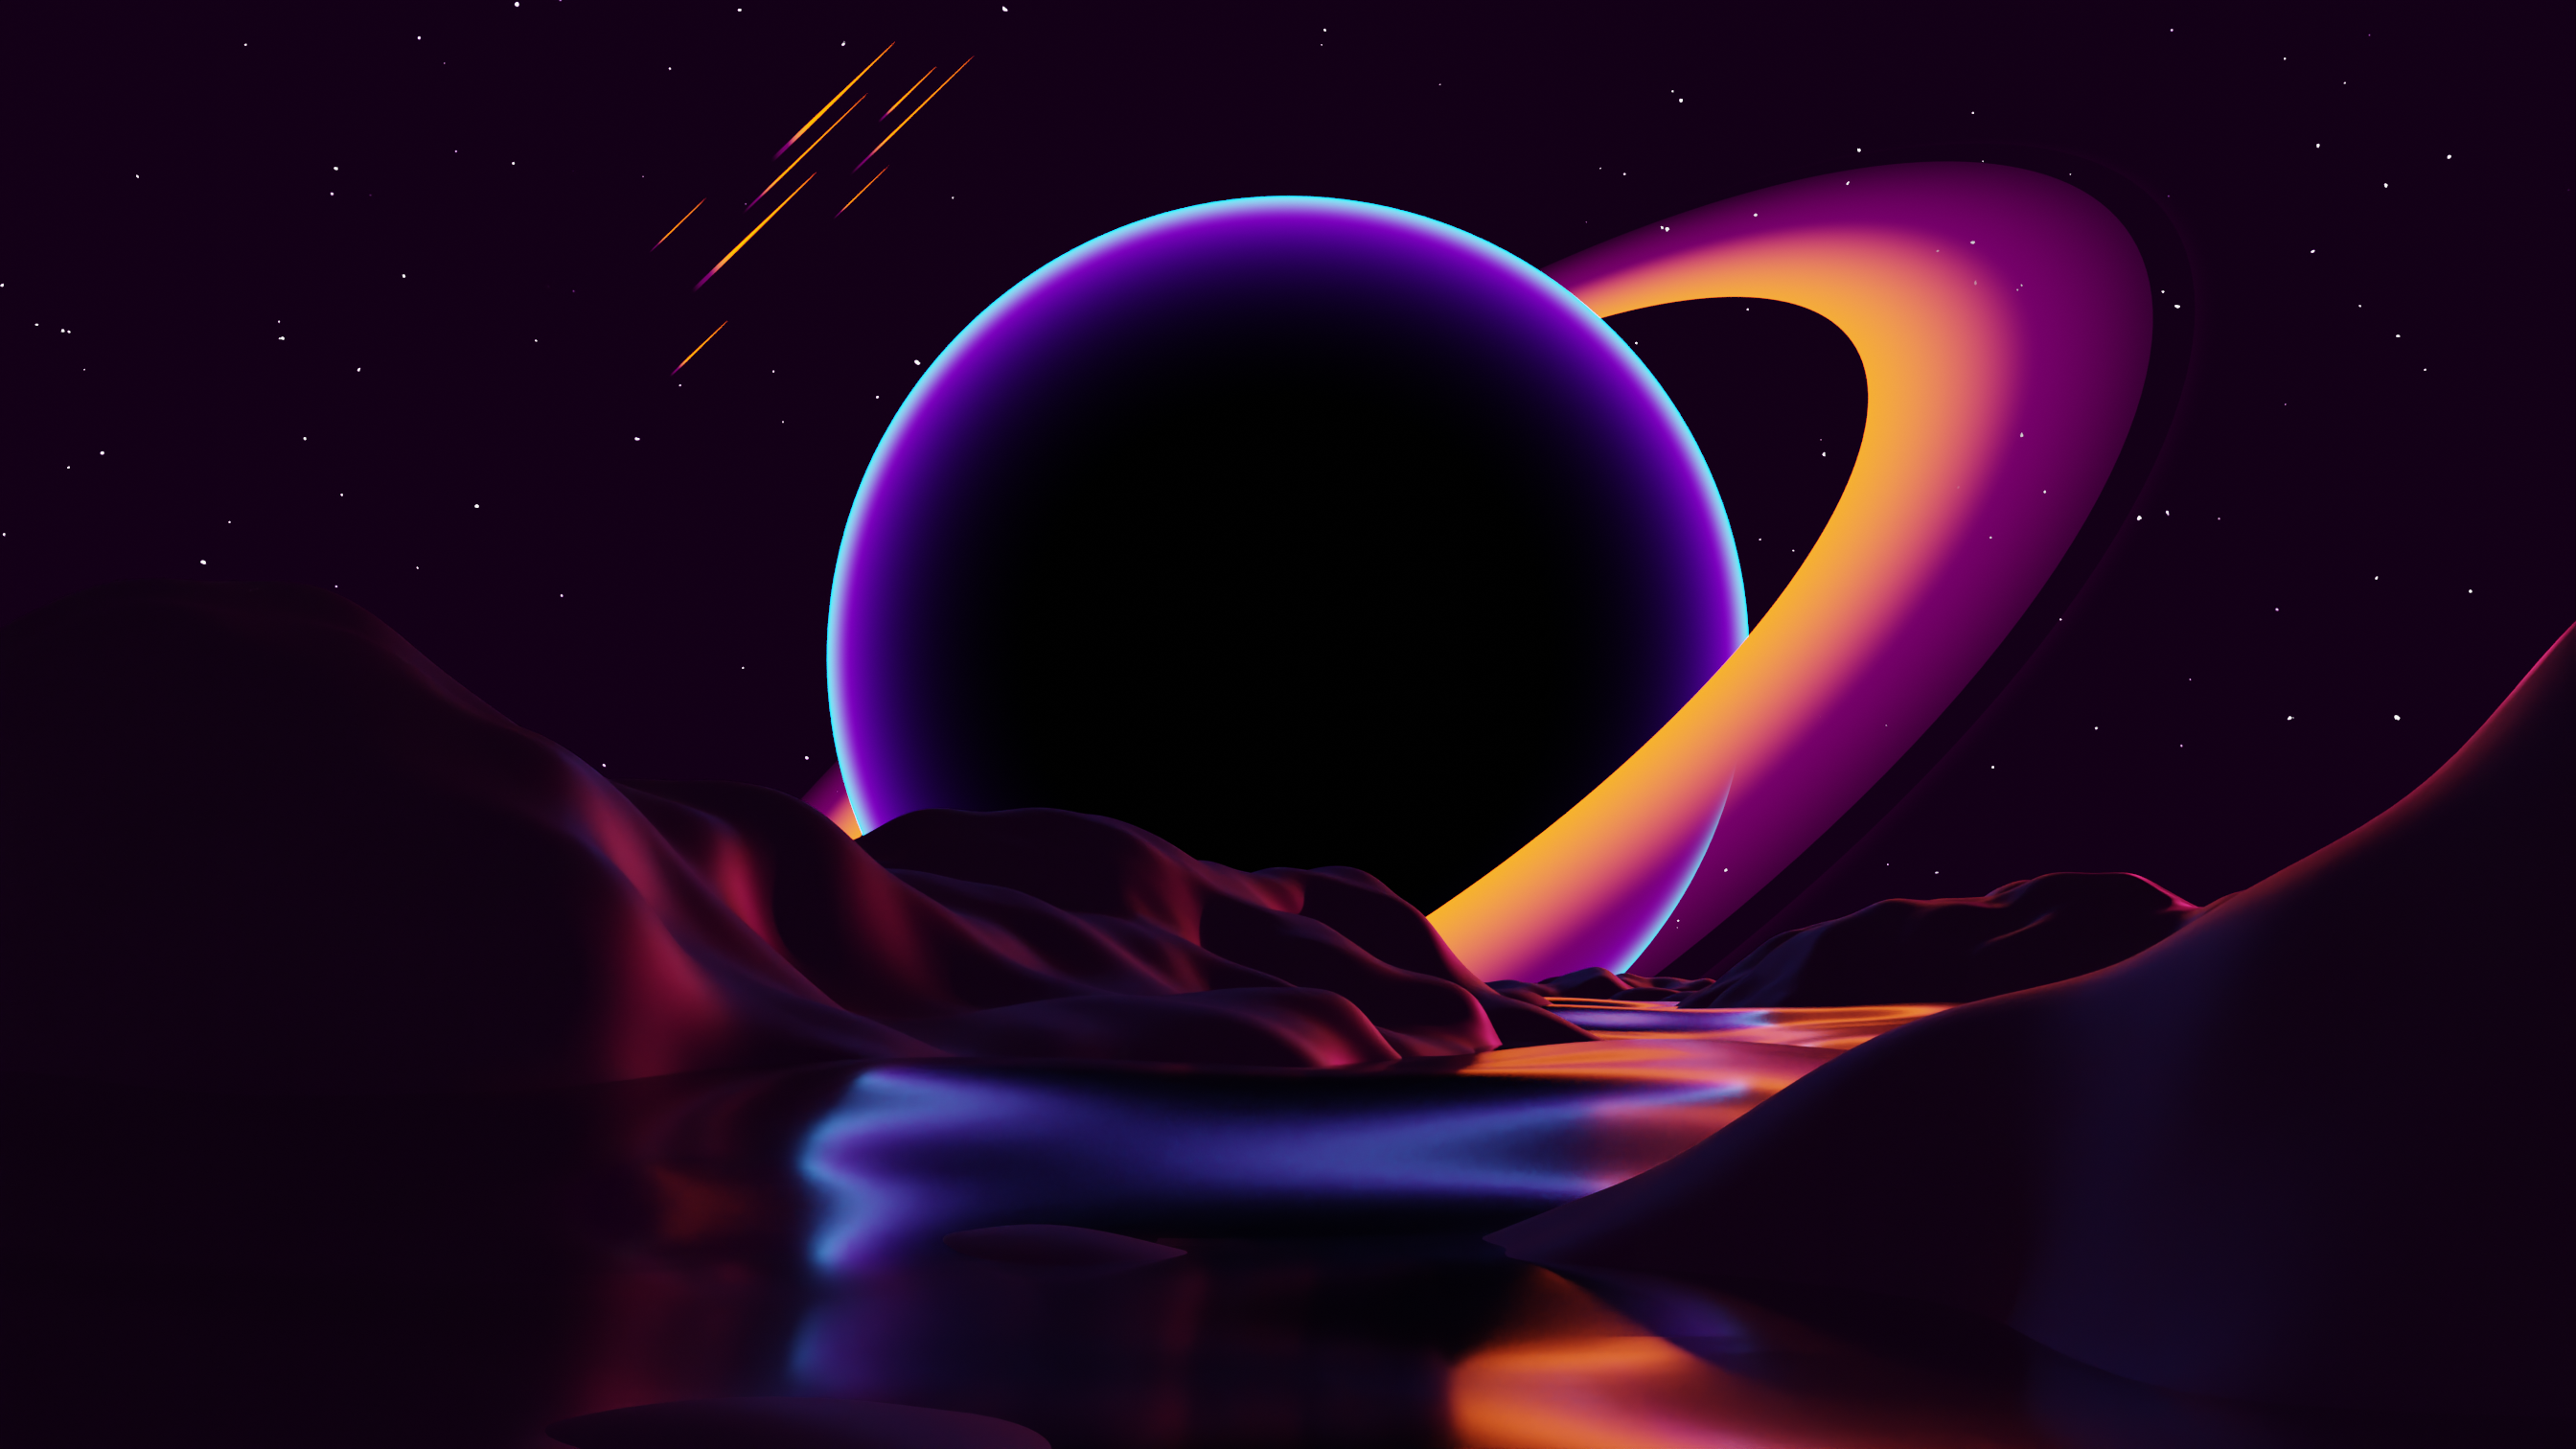 Digital Art Artwork Illustration Planet Minimalism Dark Saturn Planetary Rings Abstract Space 2688x1512